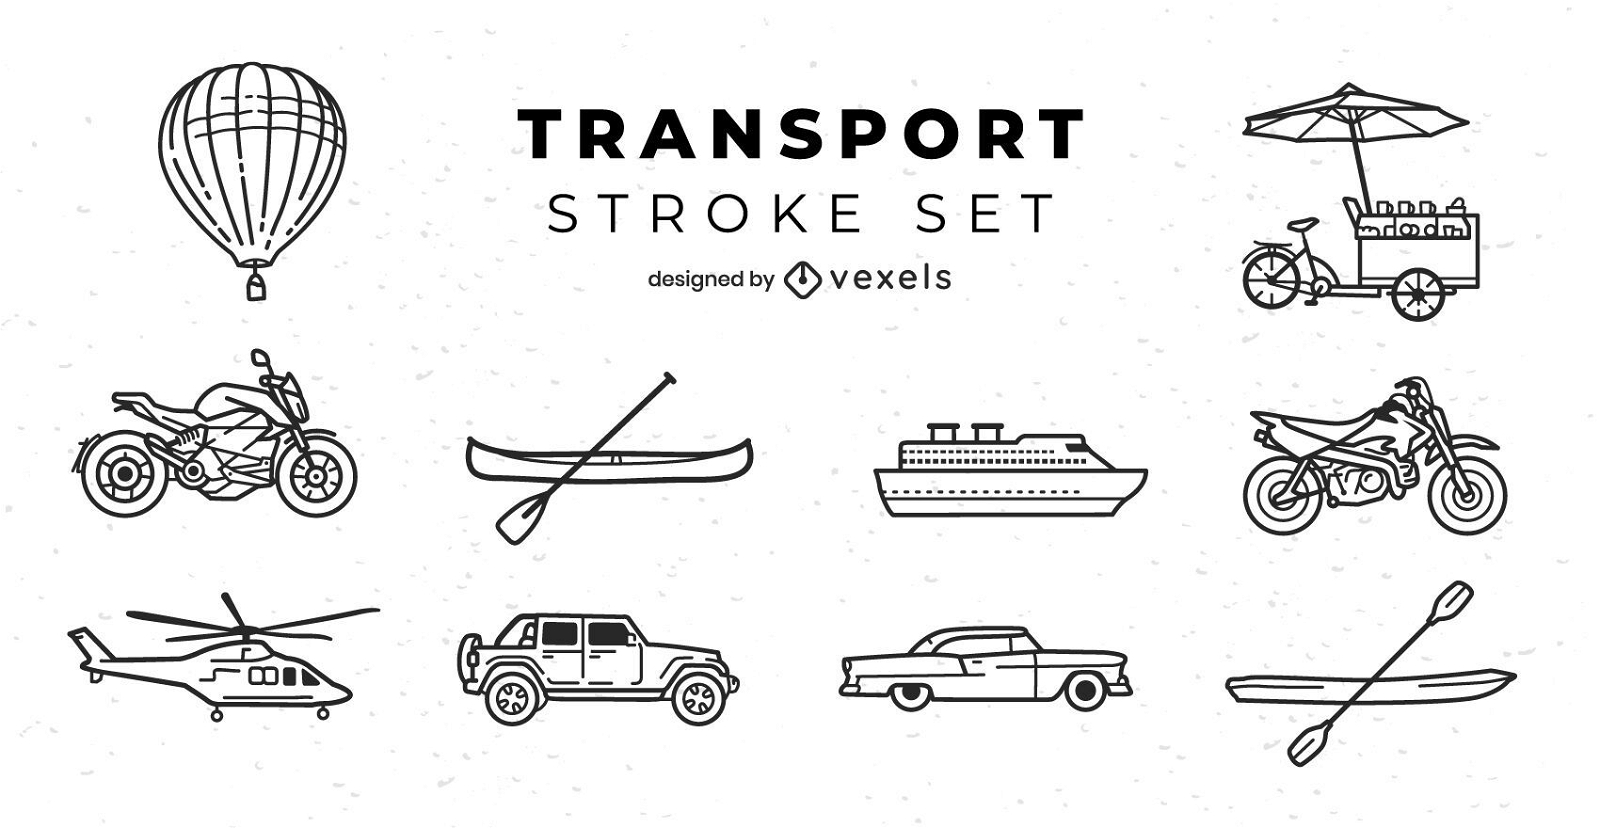 Means of Transport | Transportation poster, Transportation, Picture